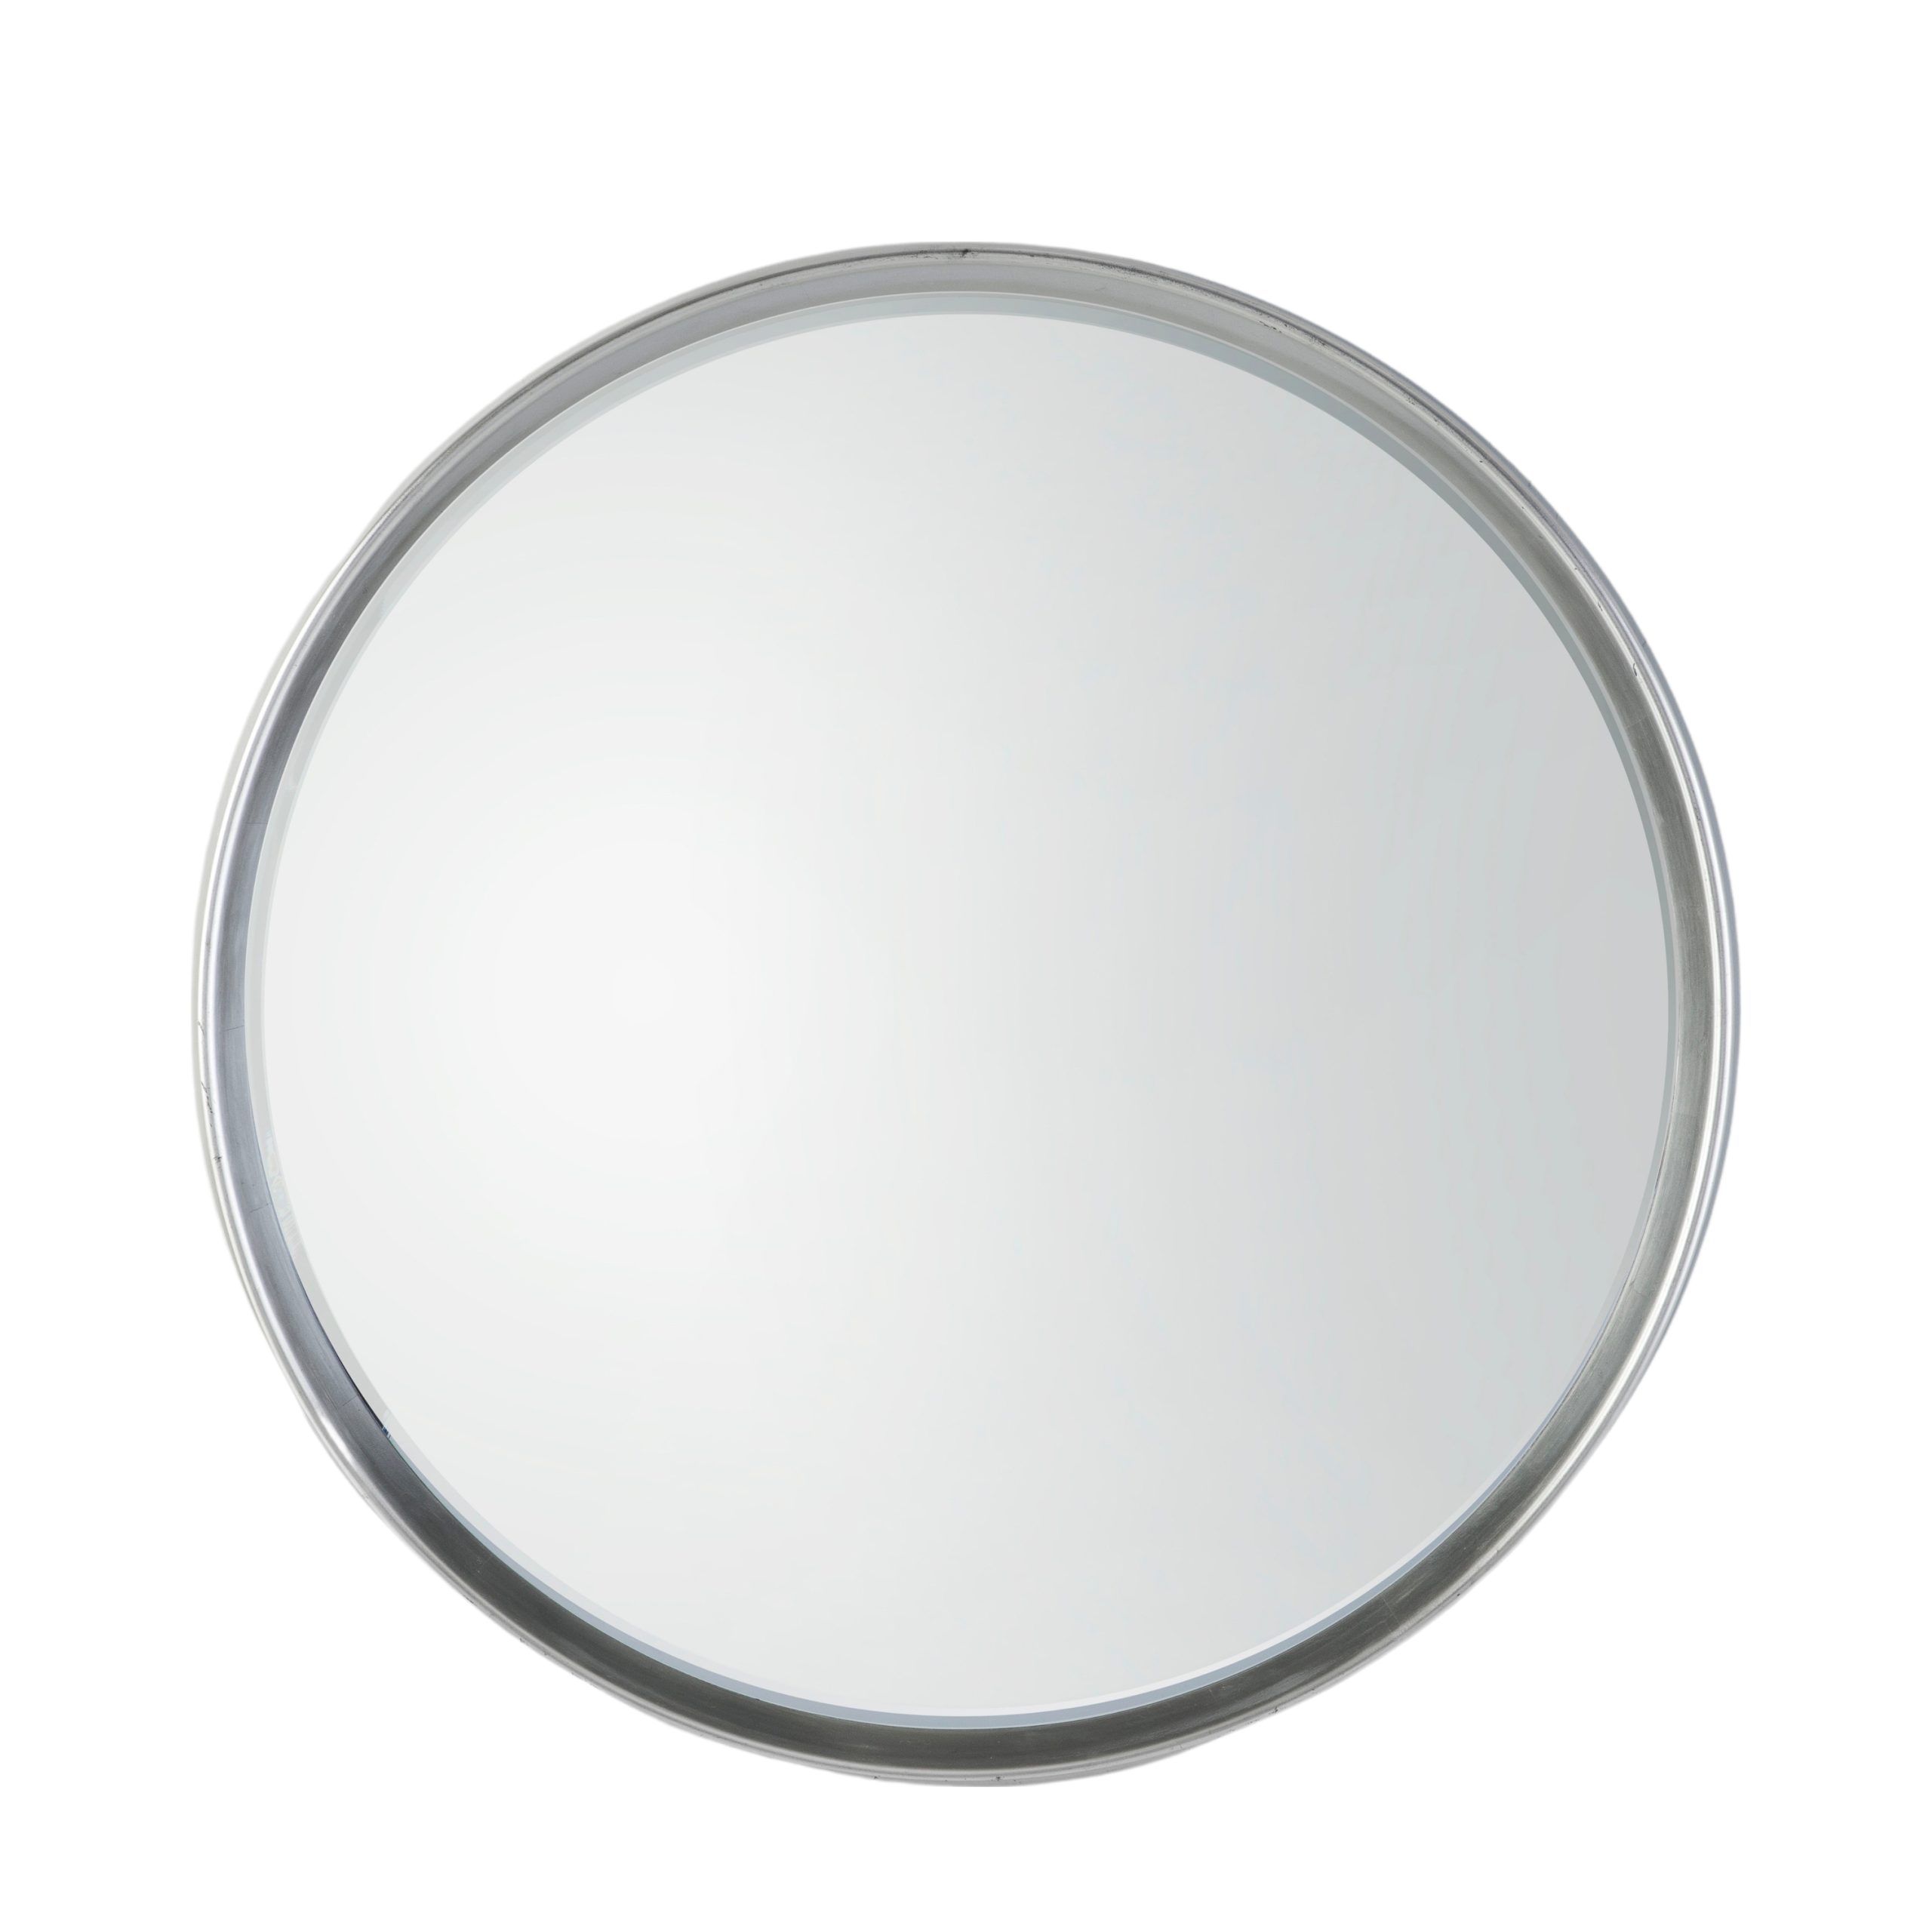 Gallery Direct Harvey Round Mirror Silver